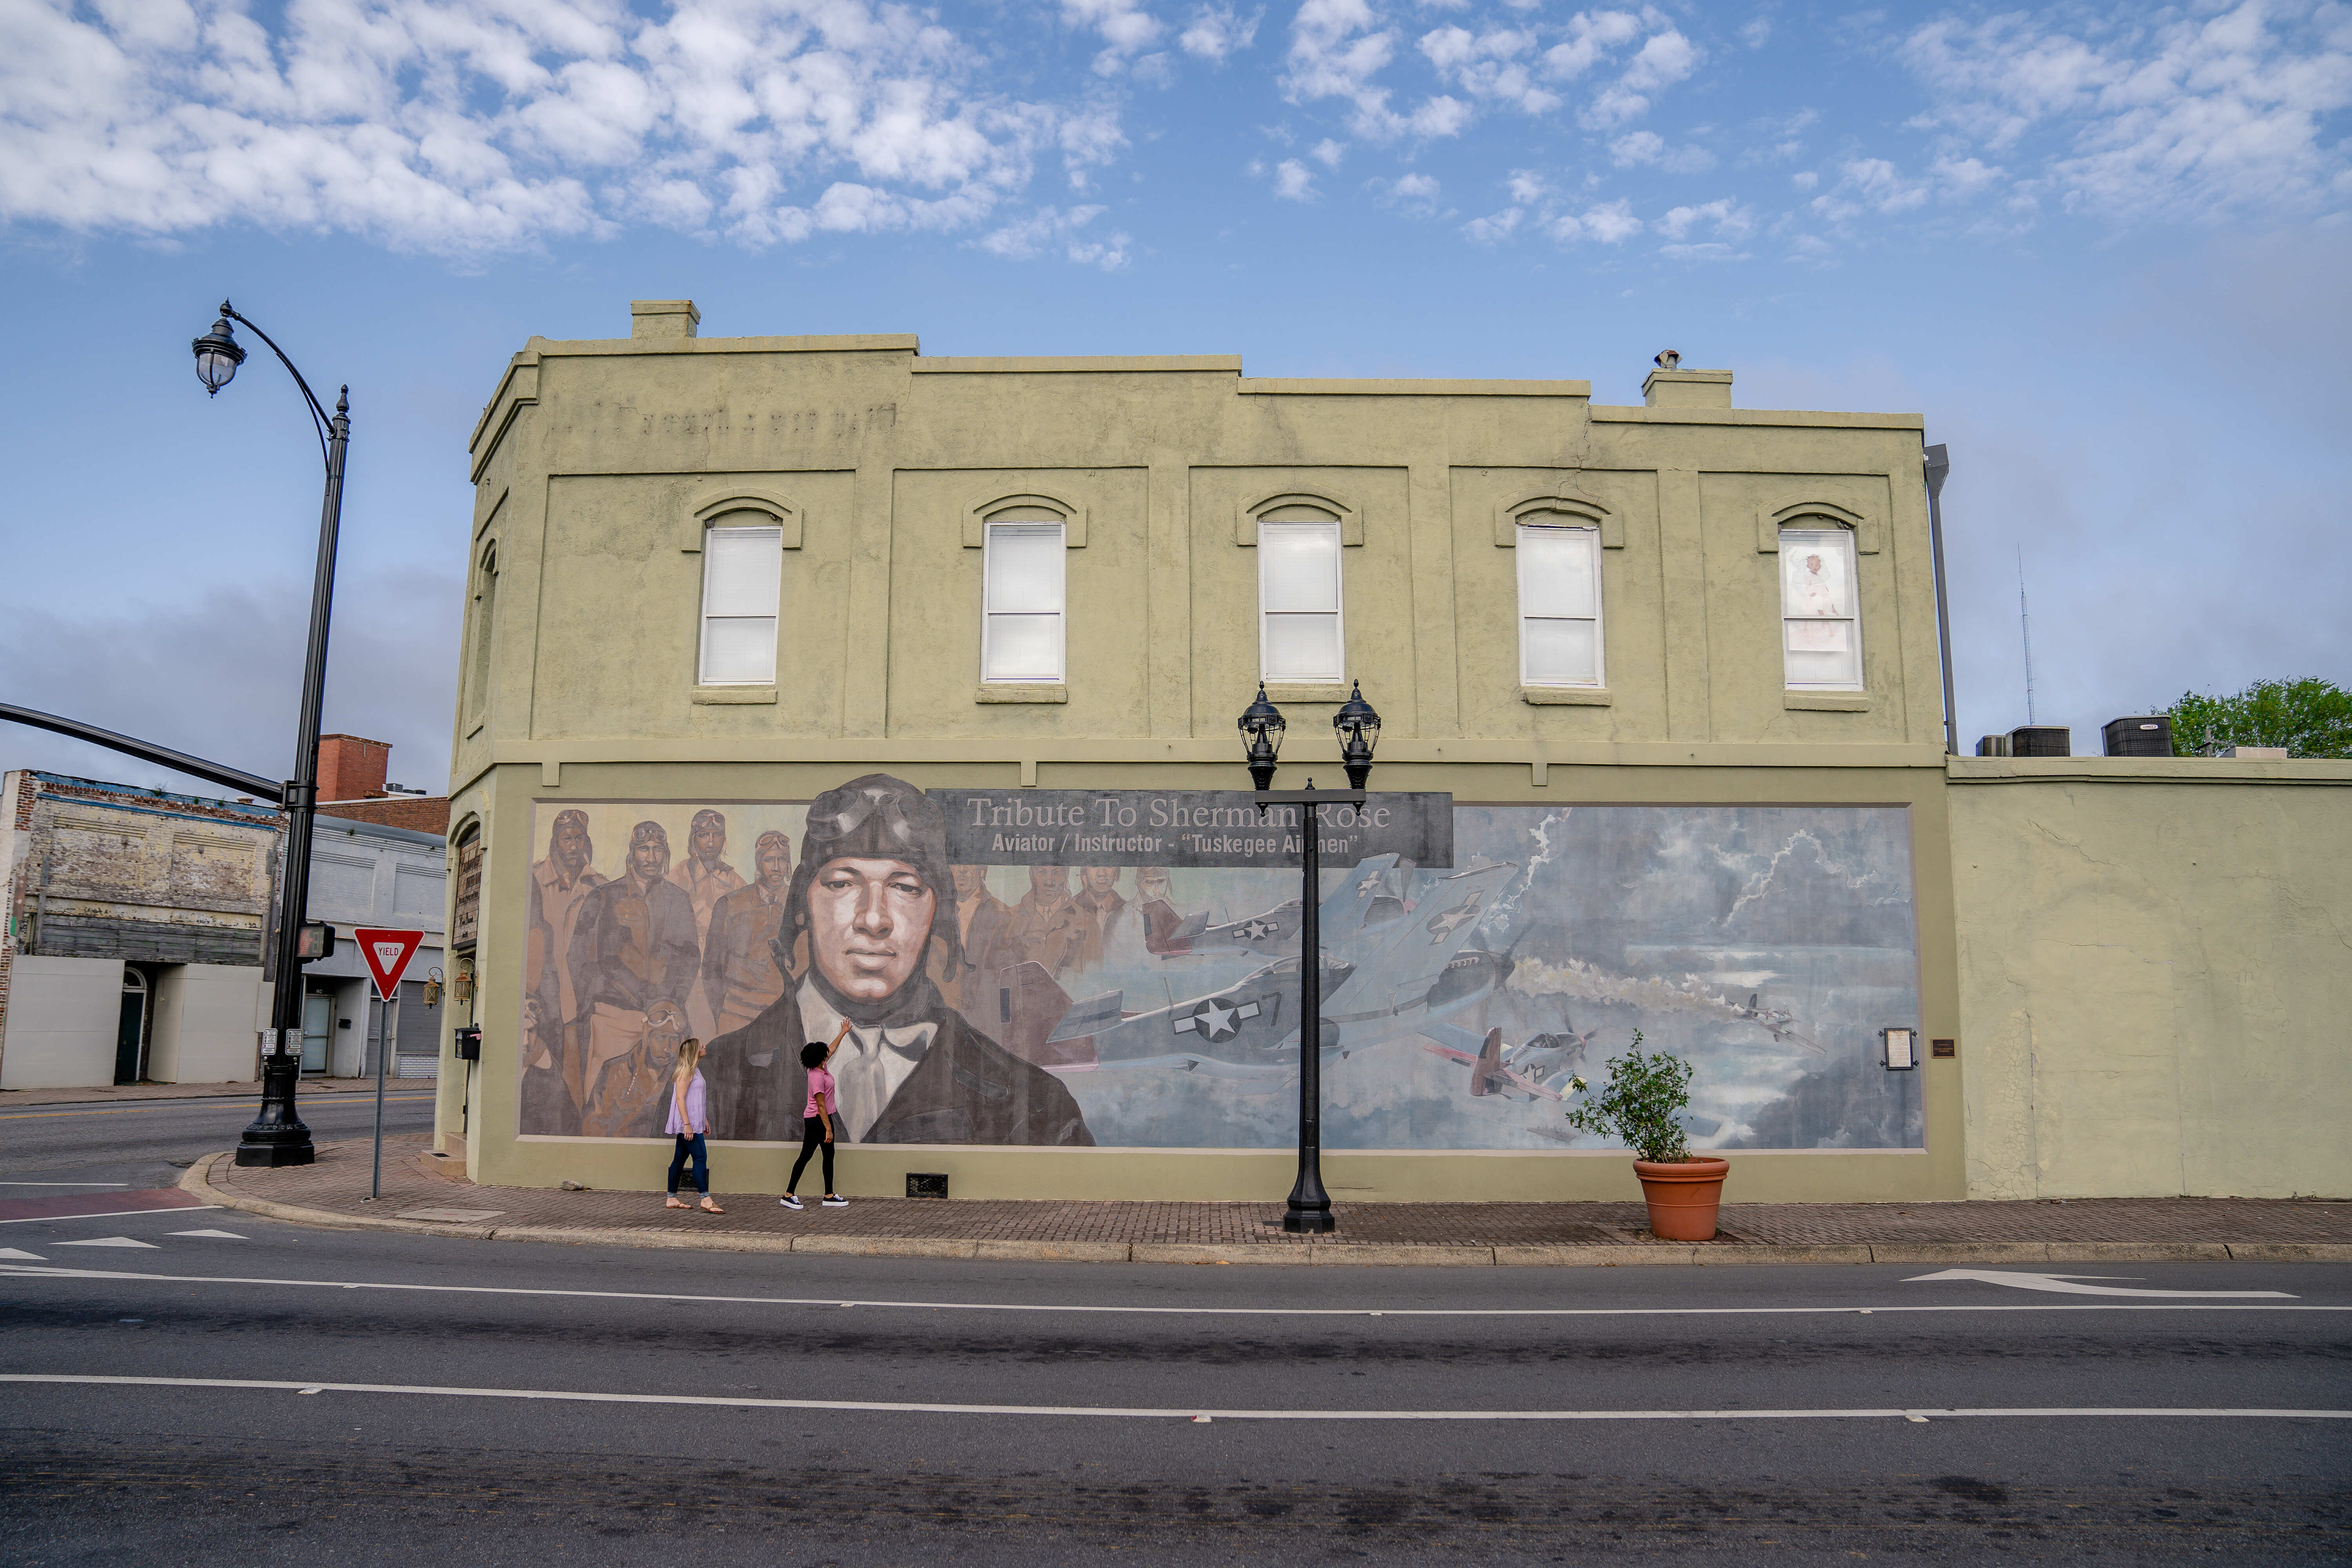 Murals in downtown street of Dothan, Alabama